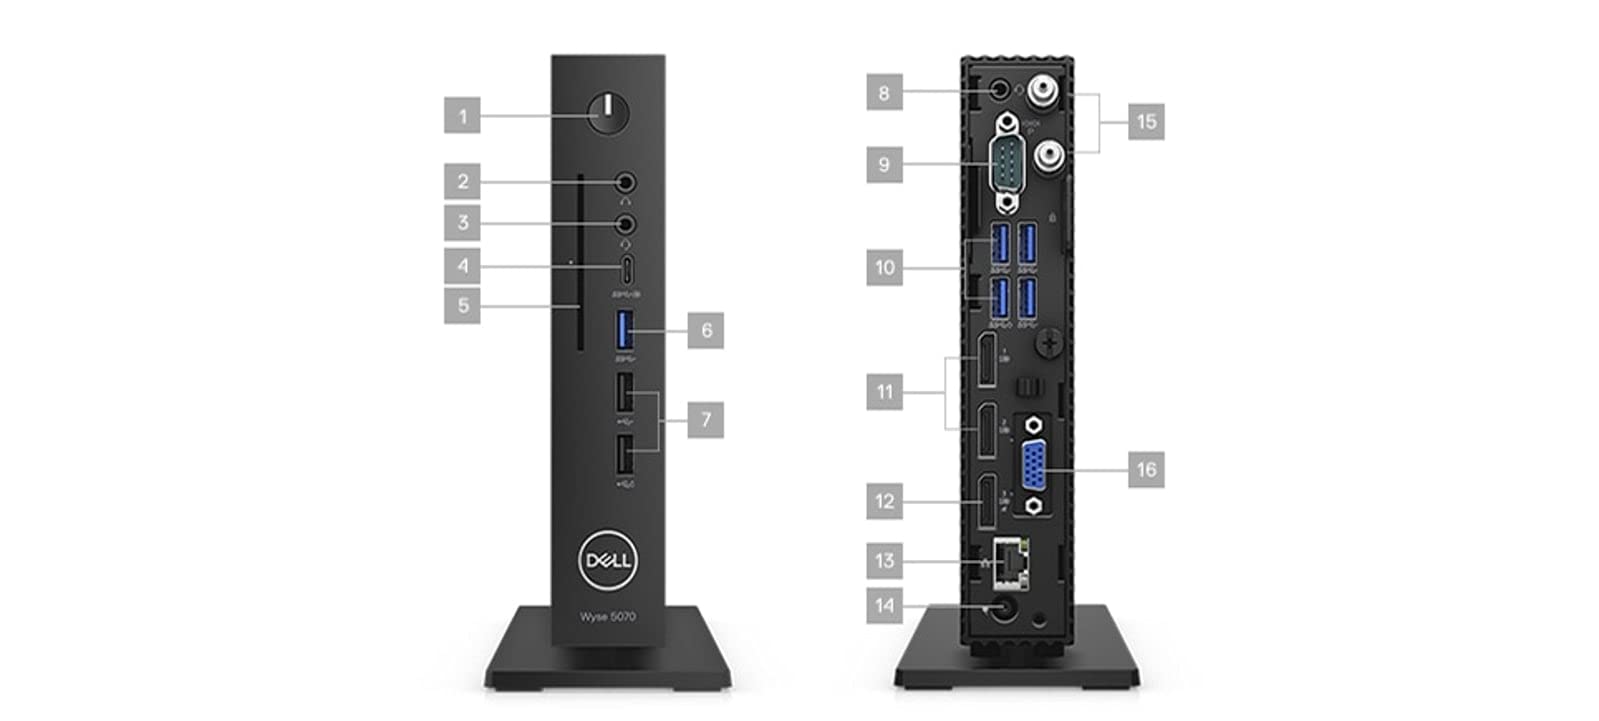 Dell Wyse 5070 Desktop (2018) | Core Celeron - - 4GB RAM | 4 Cores (Renewed)